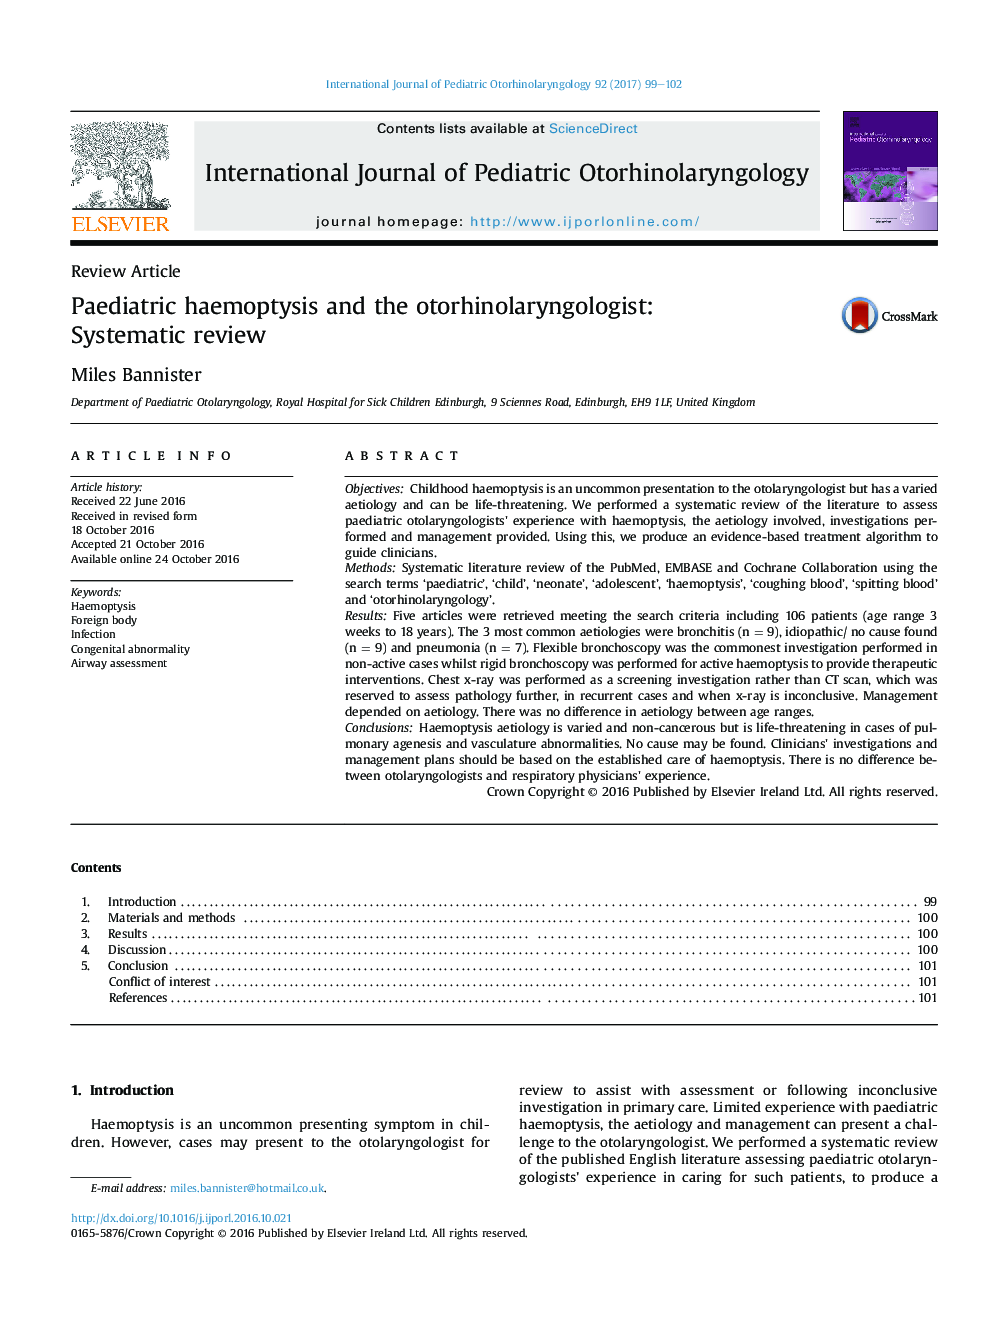 Review ArticlePaediatric haemoptysis and the otorhinolaryngologist: Systematic review